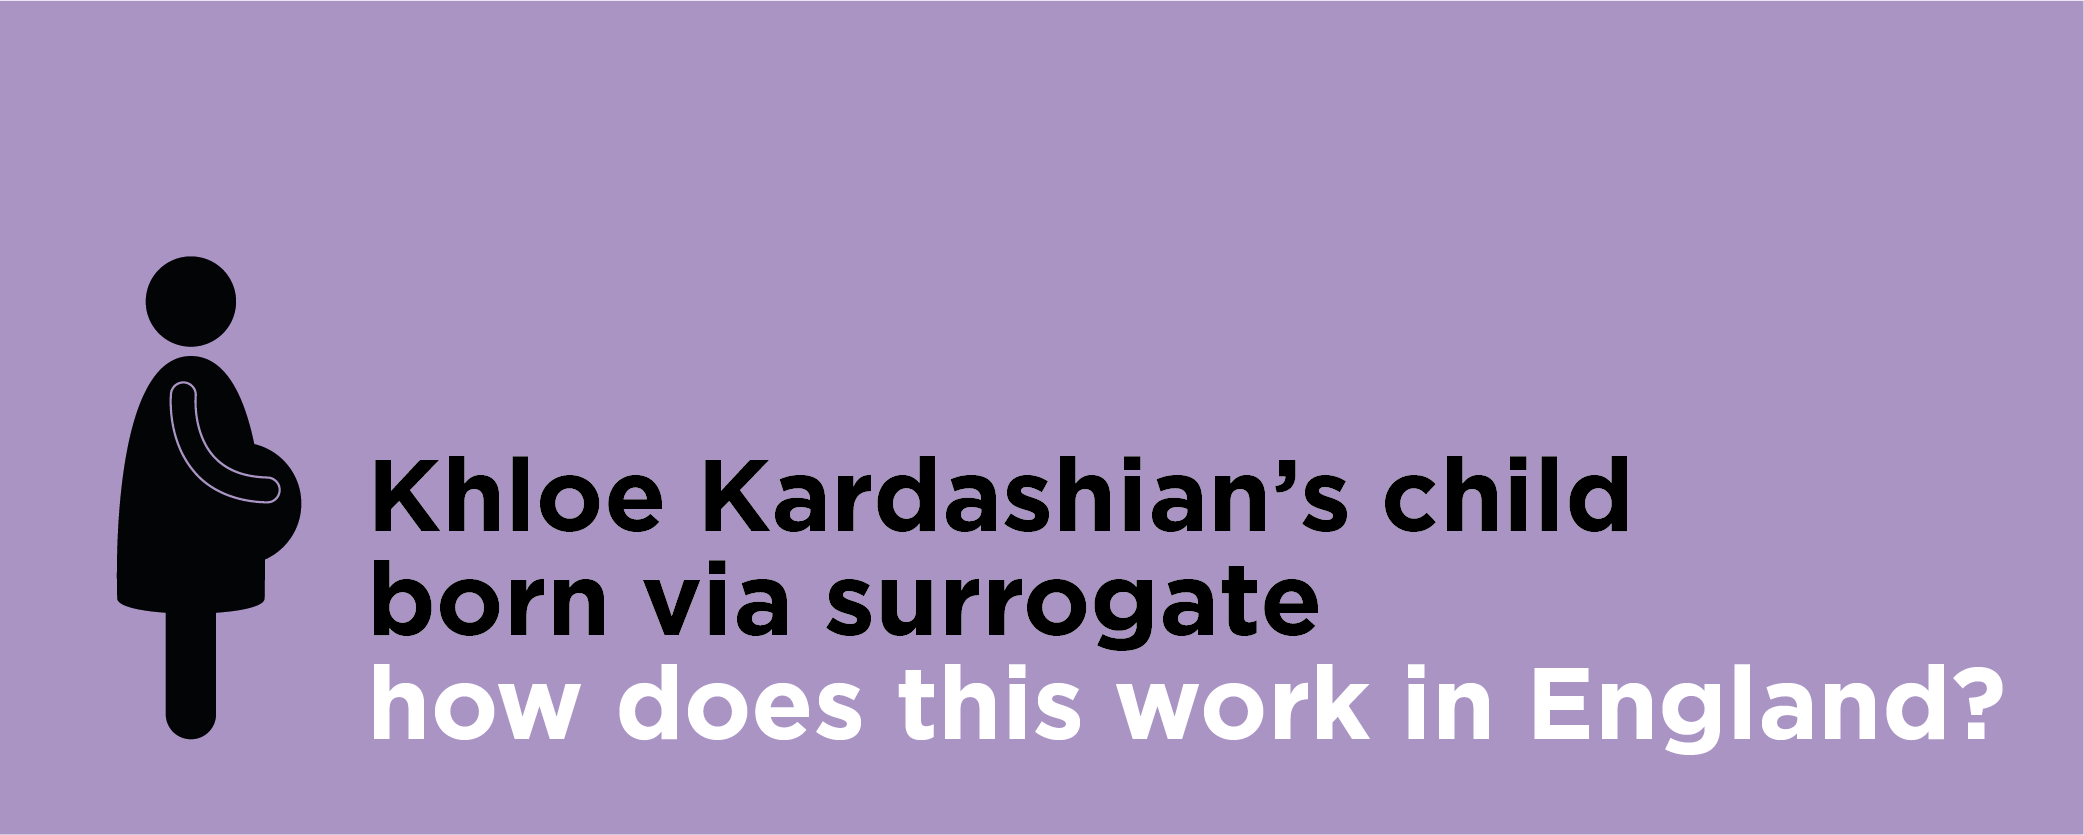 Khloe Kardashians child born via surrogate - how does this work in England?